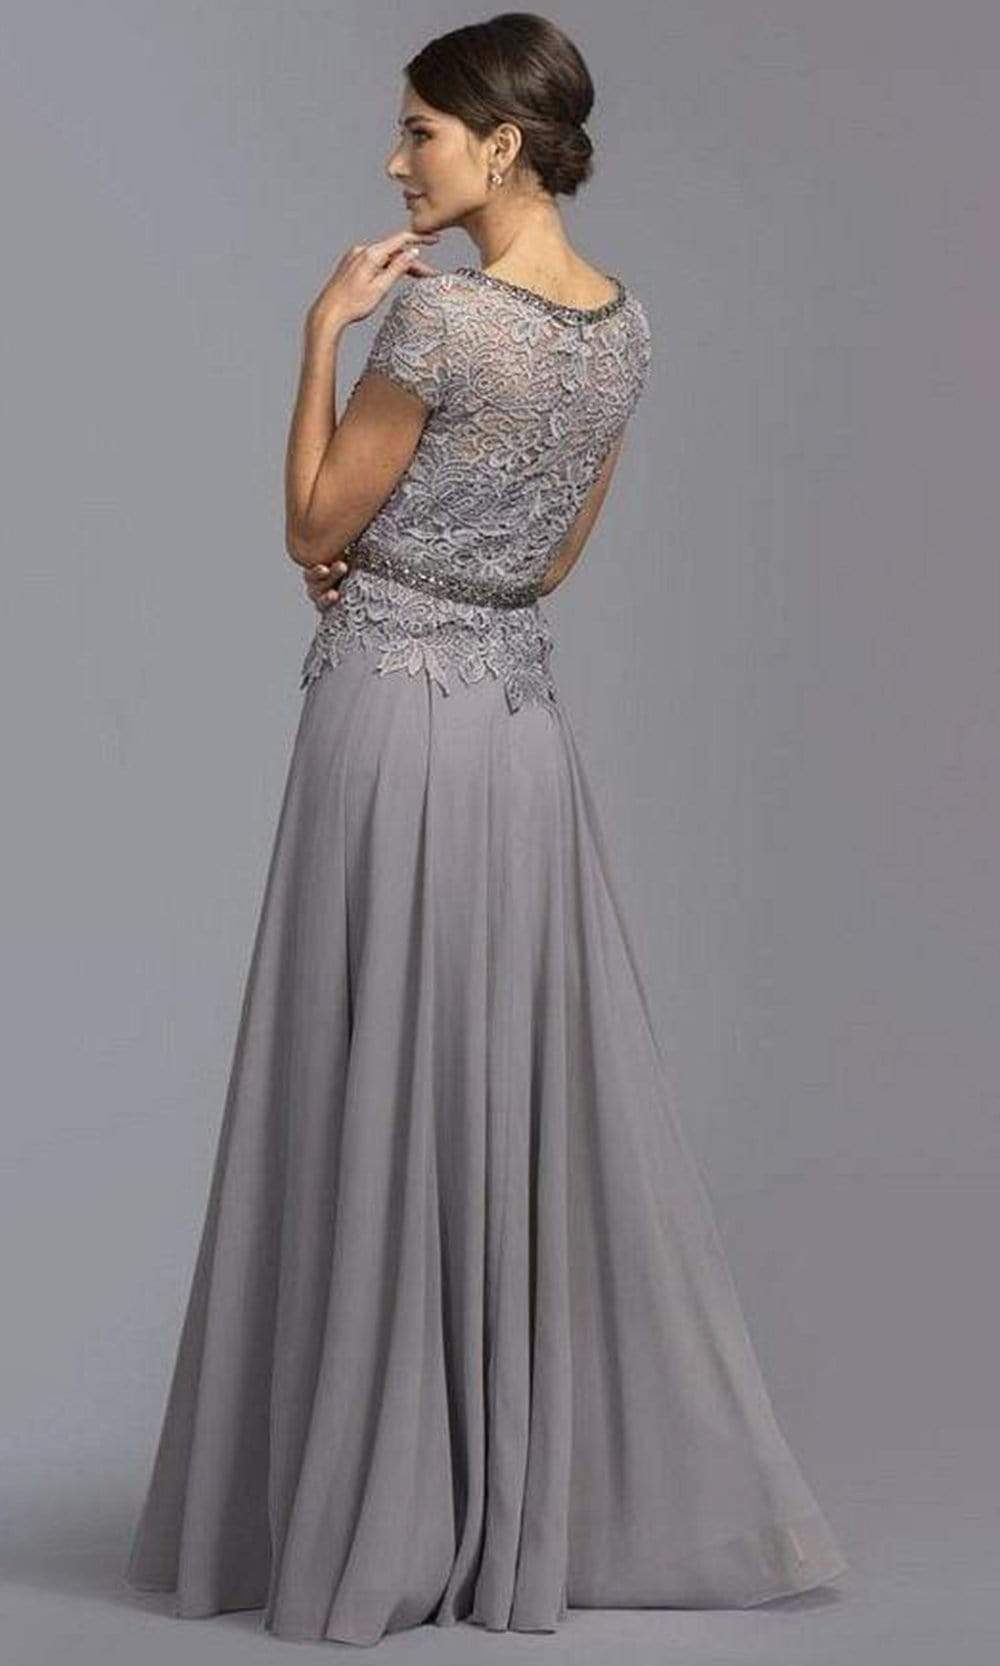 Aspeed Design - M2079 Cap Sleeve Lace Peplum Chiffon Dress Mother of the Bride Dresses